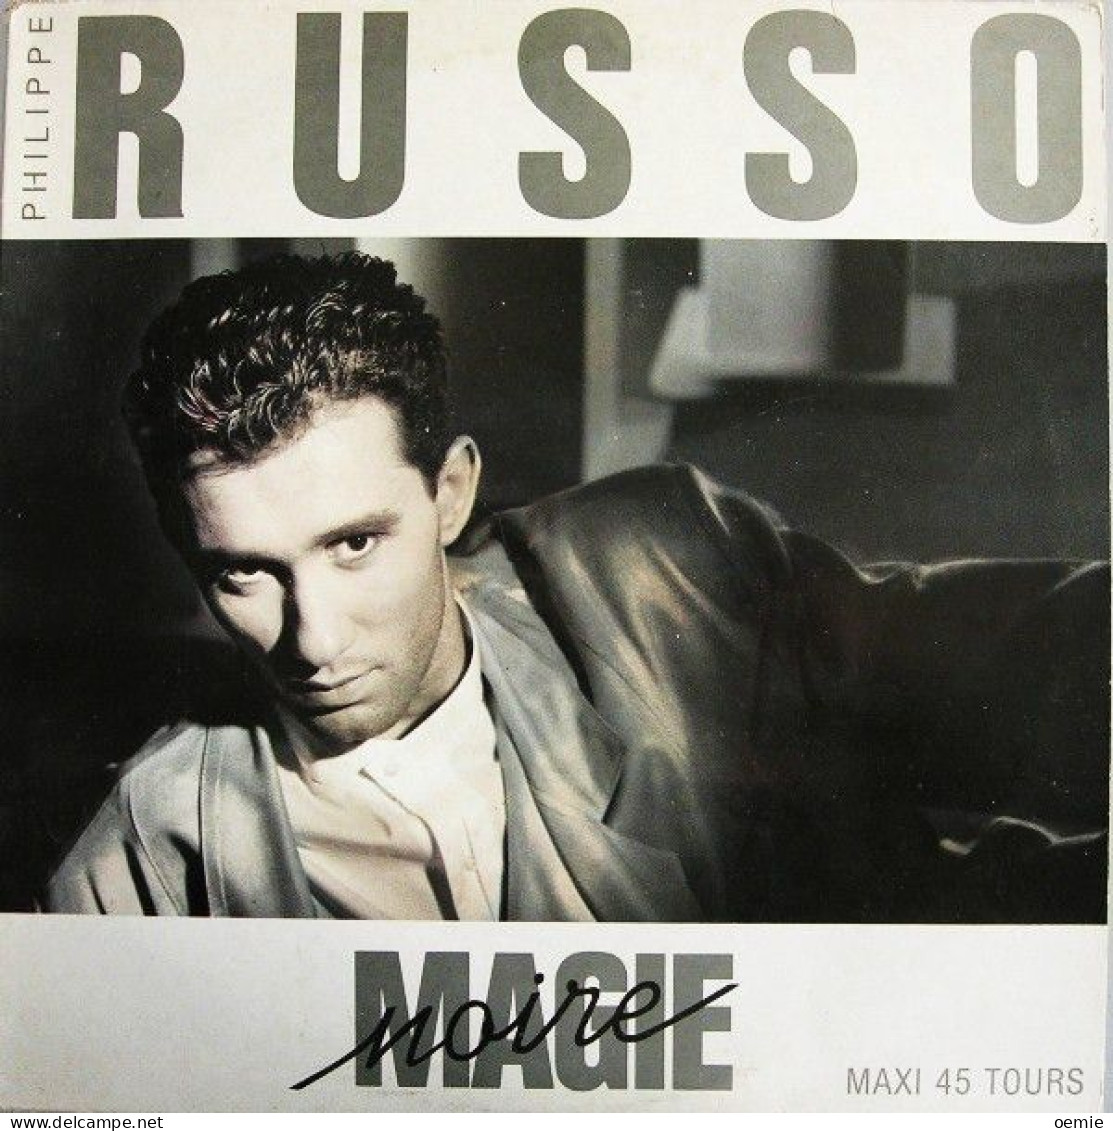 PHILIPPE  RUSSO  MAGIE NOIRE - 45 Toeren - Maxi-Single